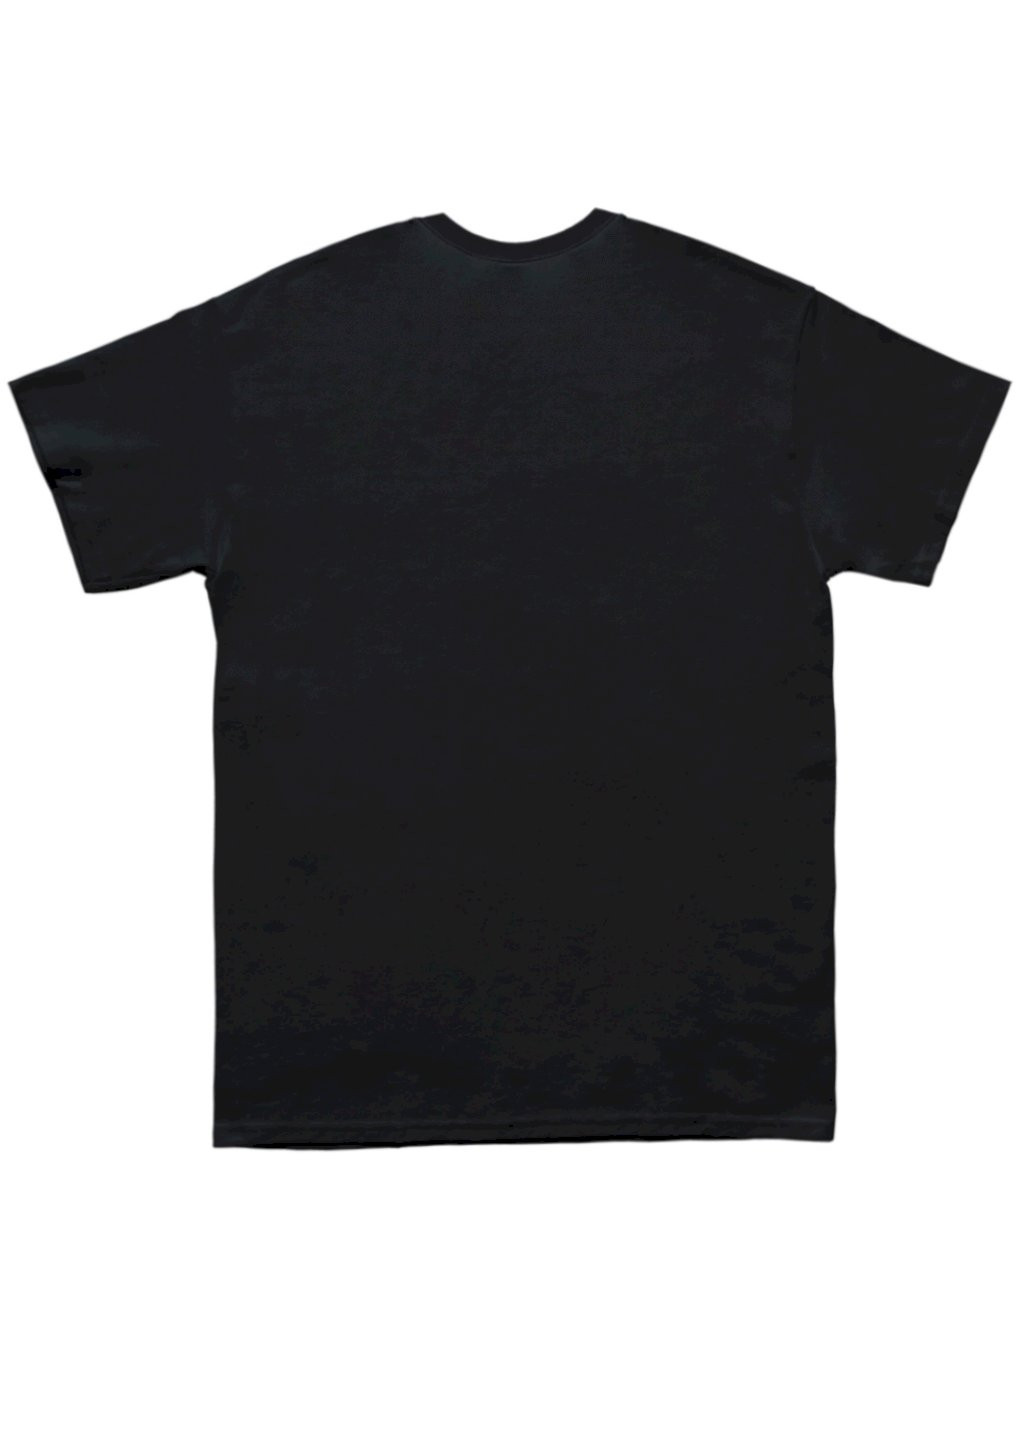 Черная футболка мужская черная "one way to mars" Trace of Space